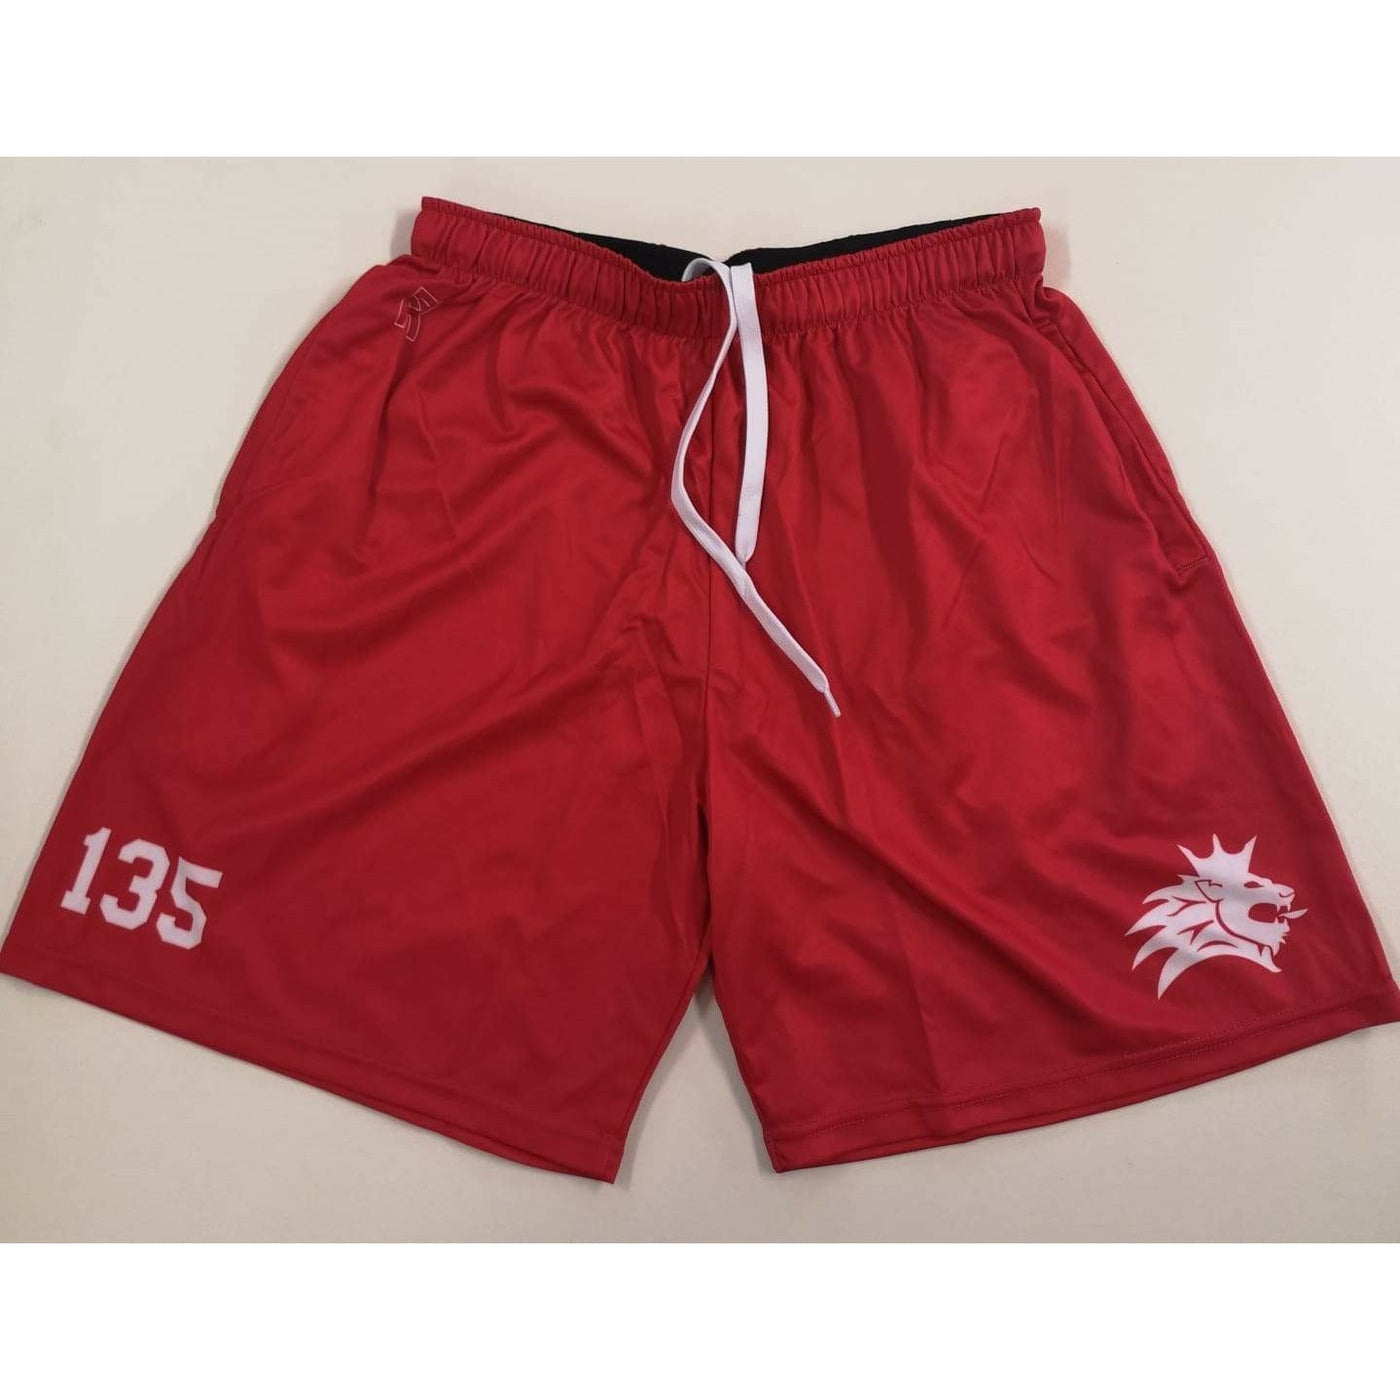 TRC Player's Shorts - Premium  from Reyrr Athletics - Shop now at Reyrr Athletics